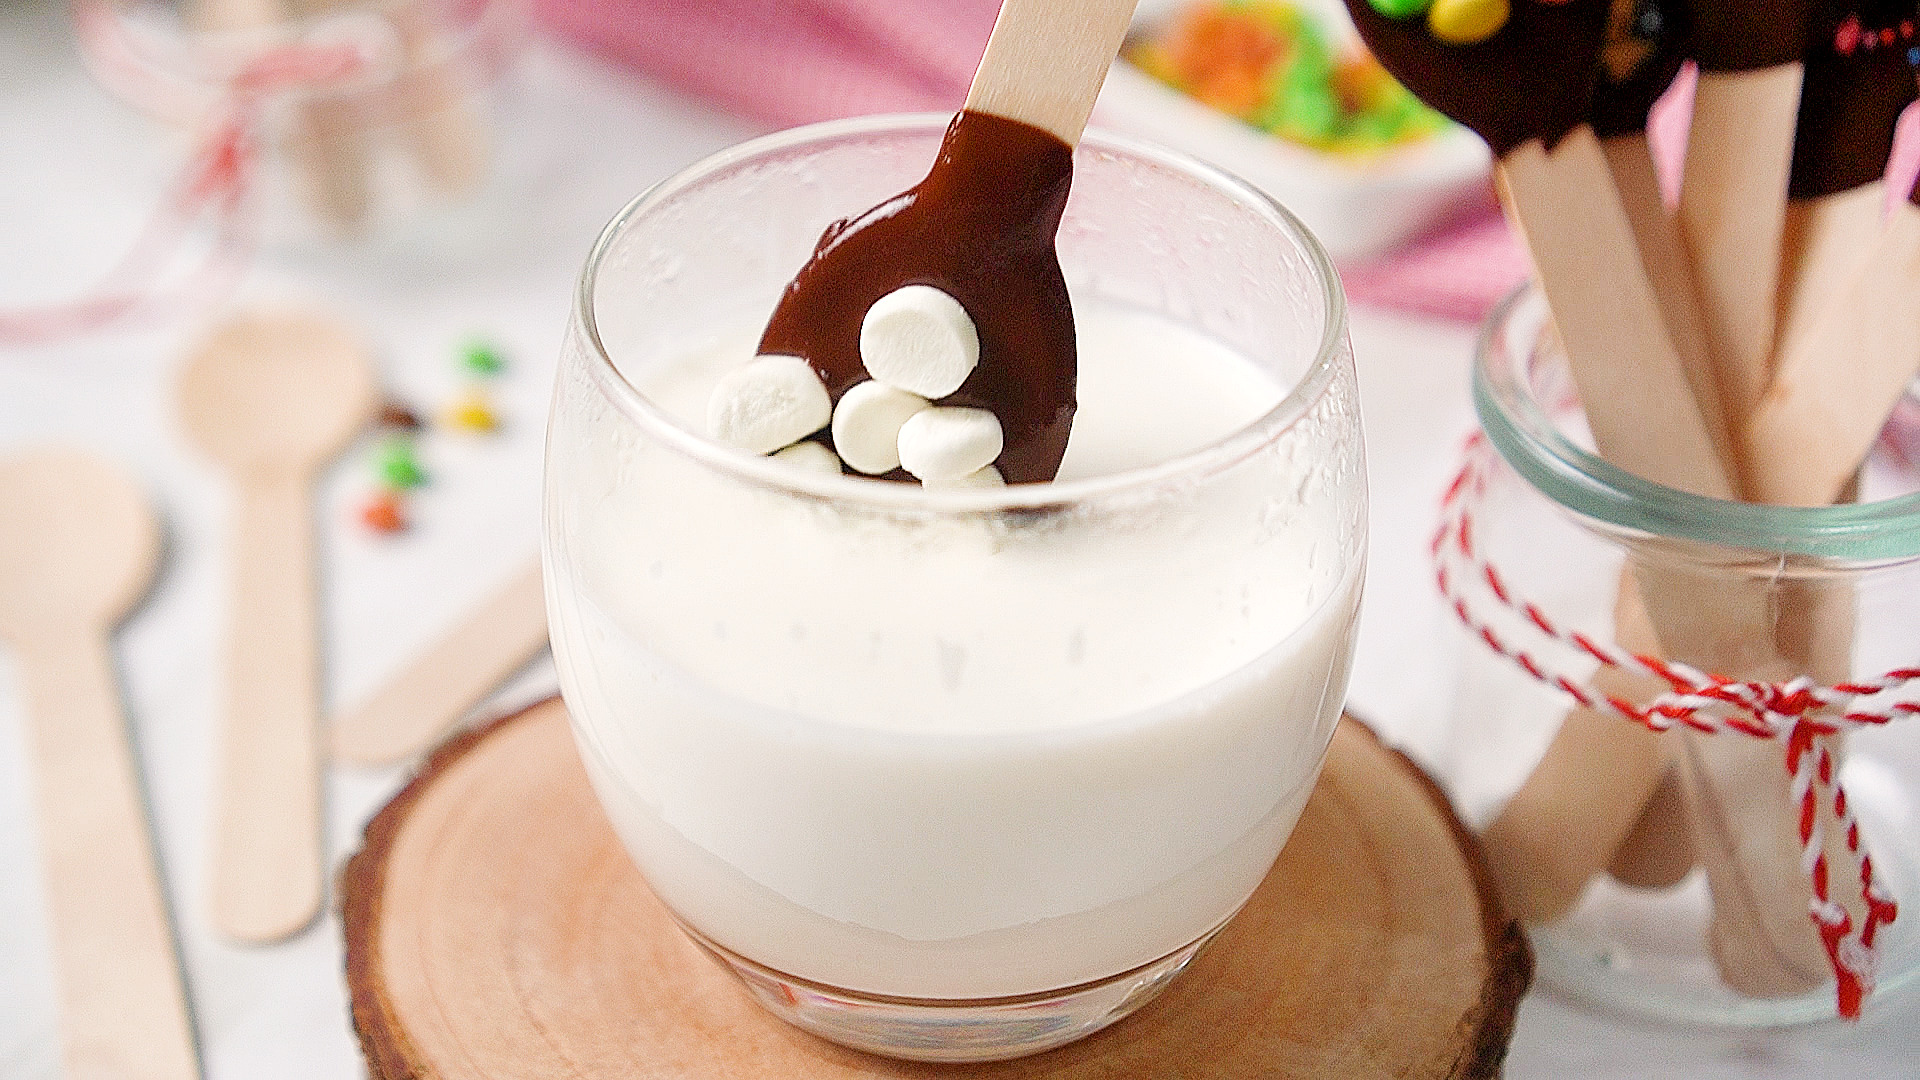 Hot Chocolate Stirrers, Chocolate Spoons